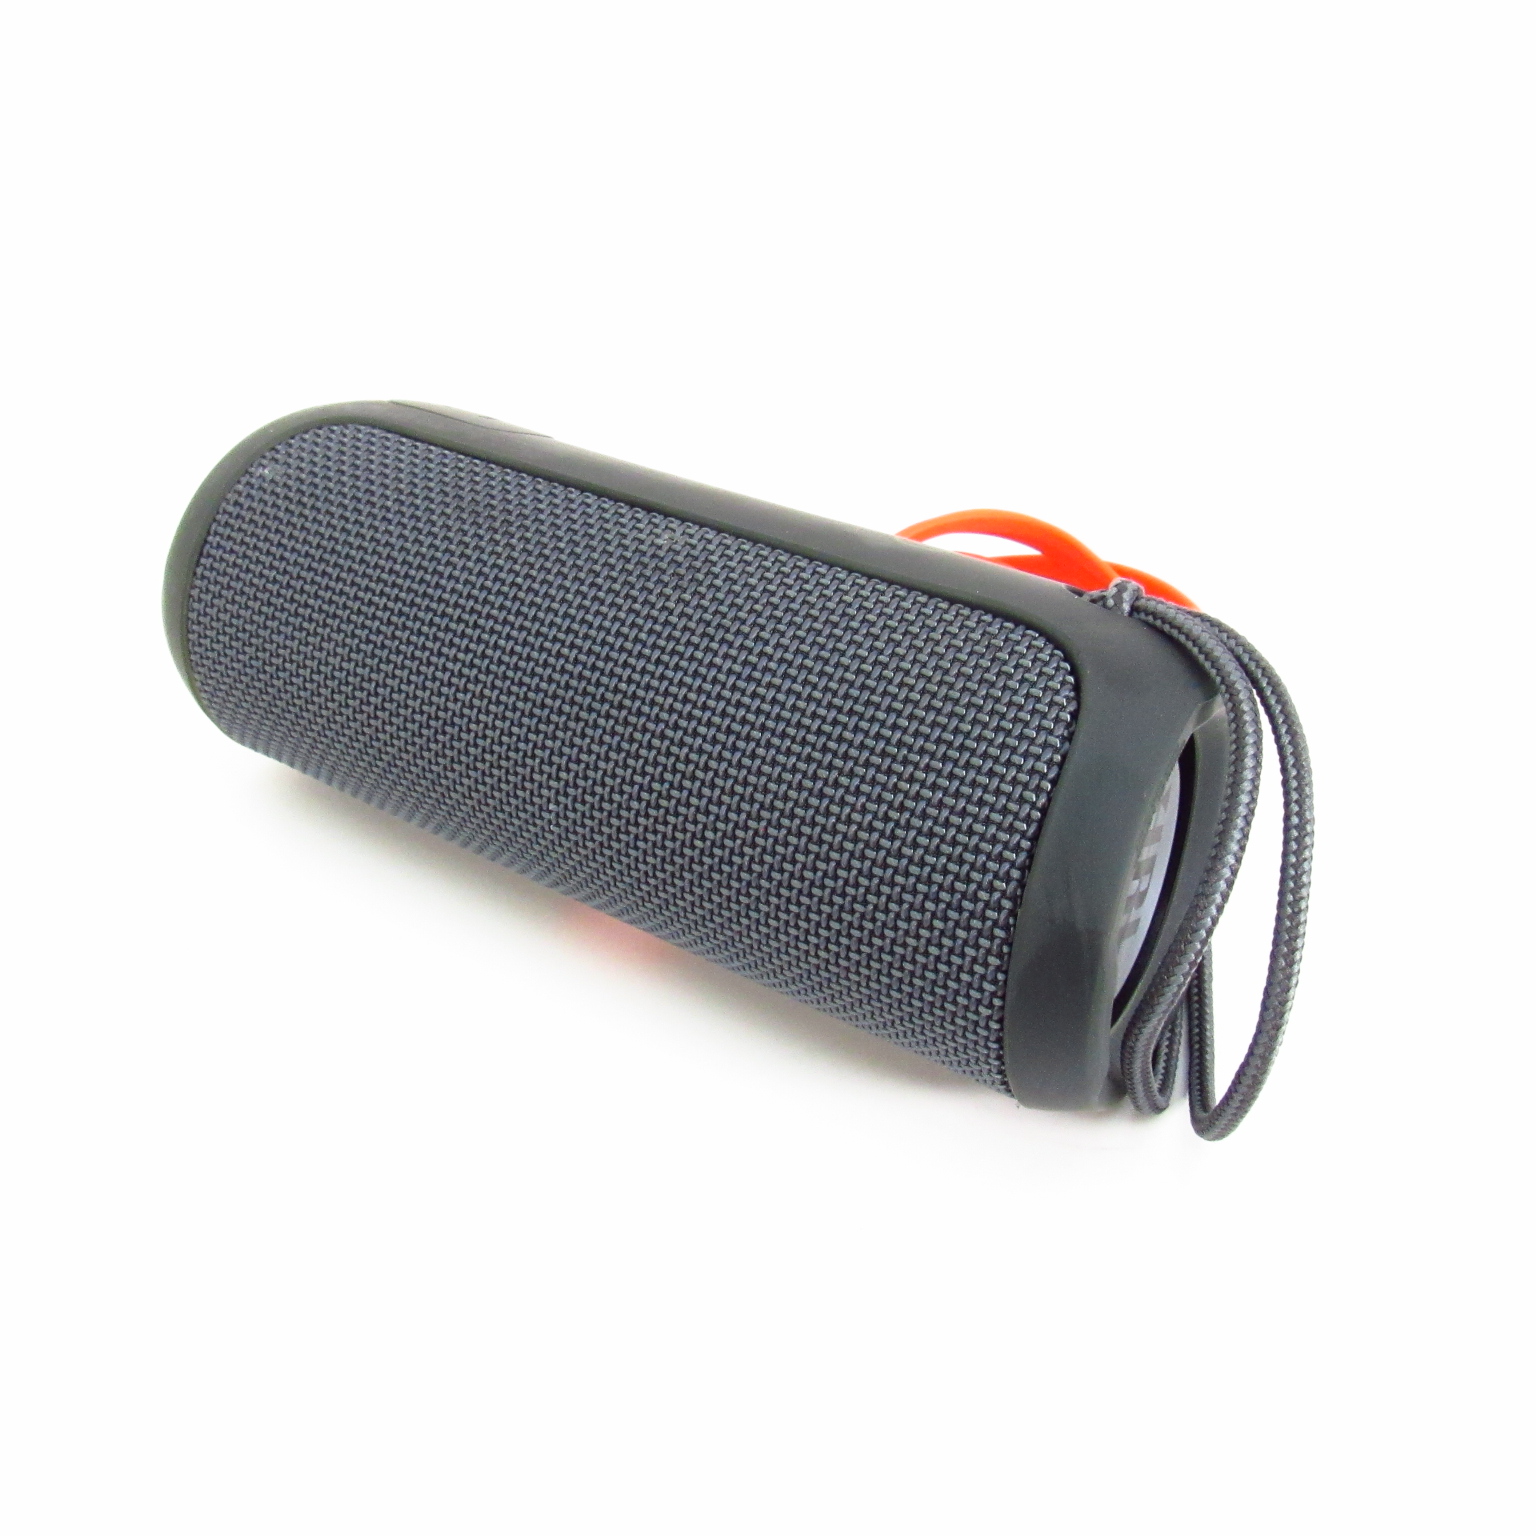 JBL Flip Essential Portable Wireless Bluetooth Speaker - Black